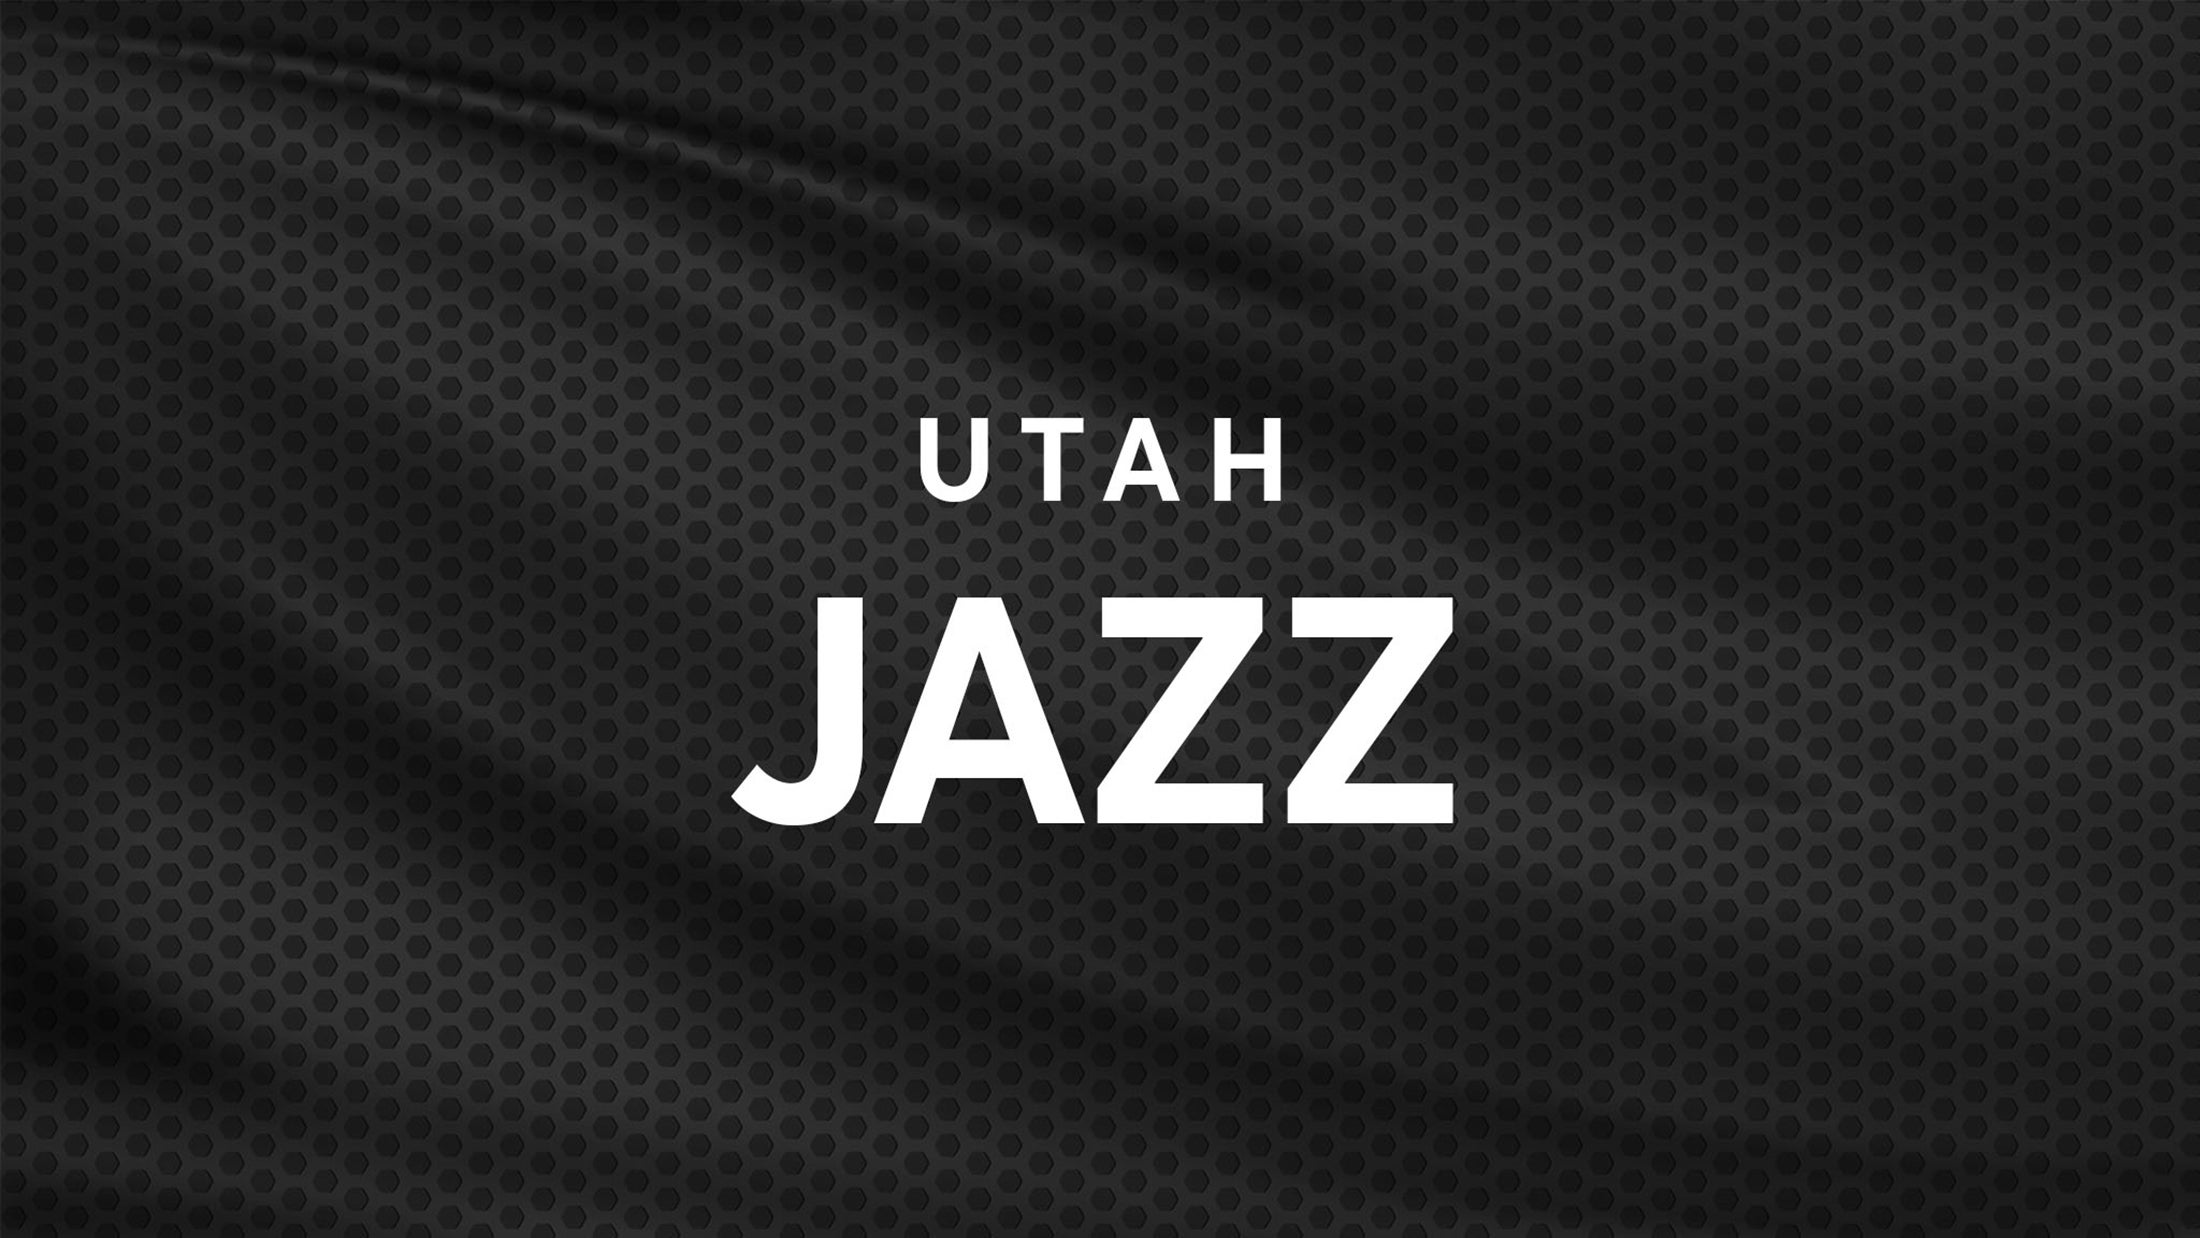 Utah Jazz vs. Denver Nuggets at Delta Center